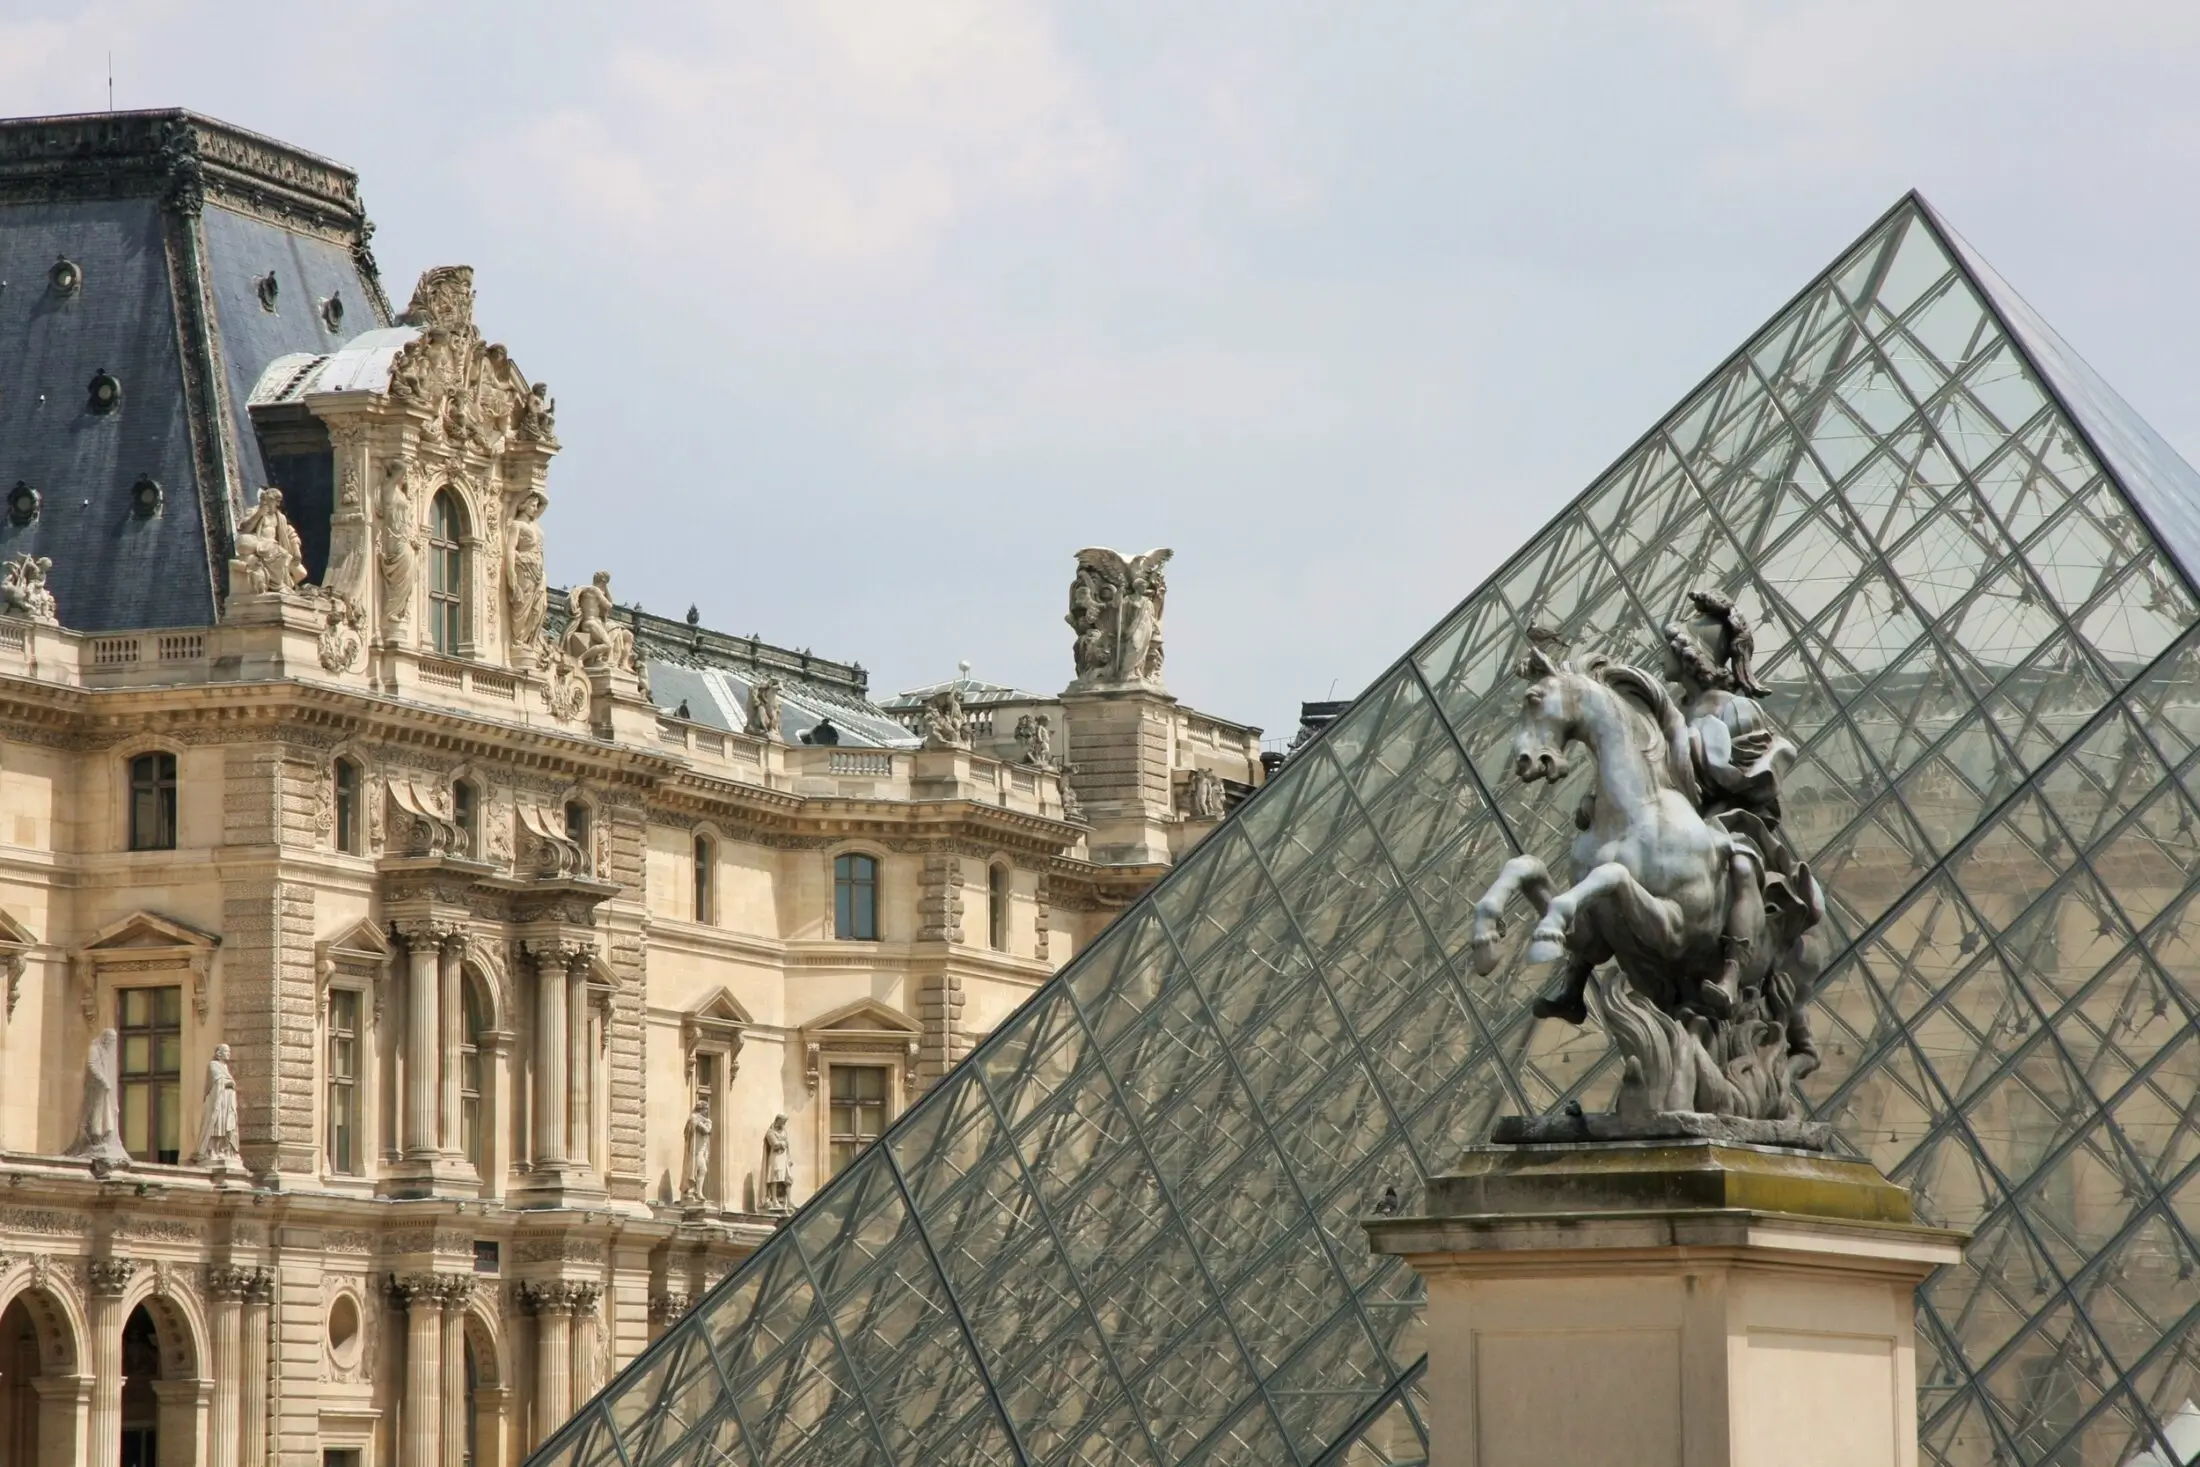 Die Pyramide des Louvre in Paris